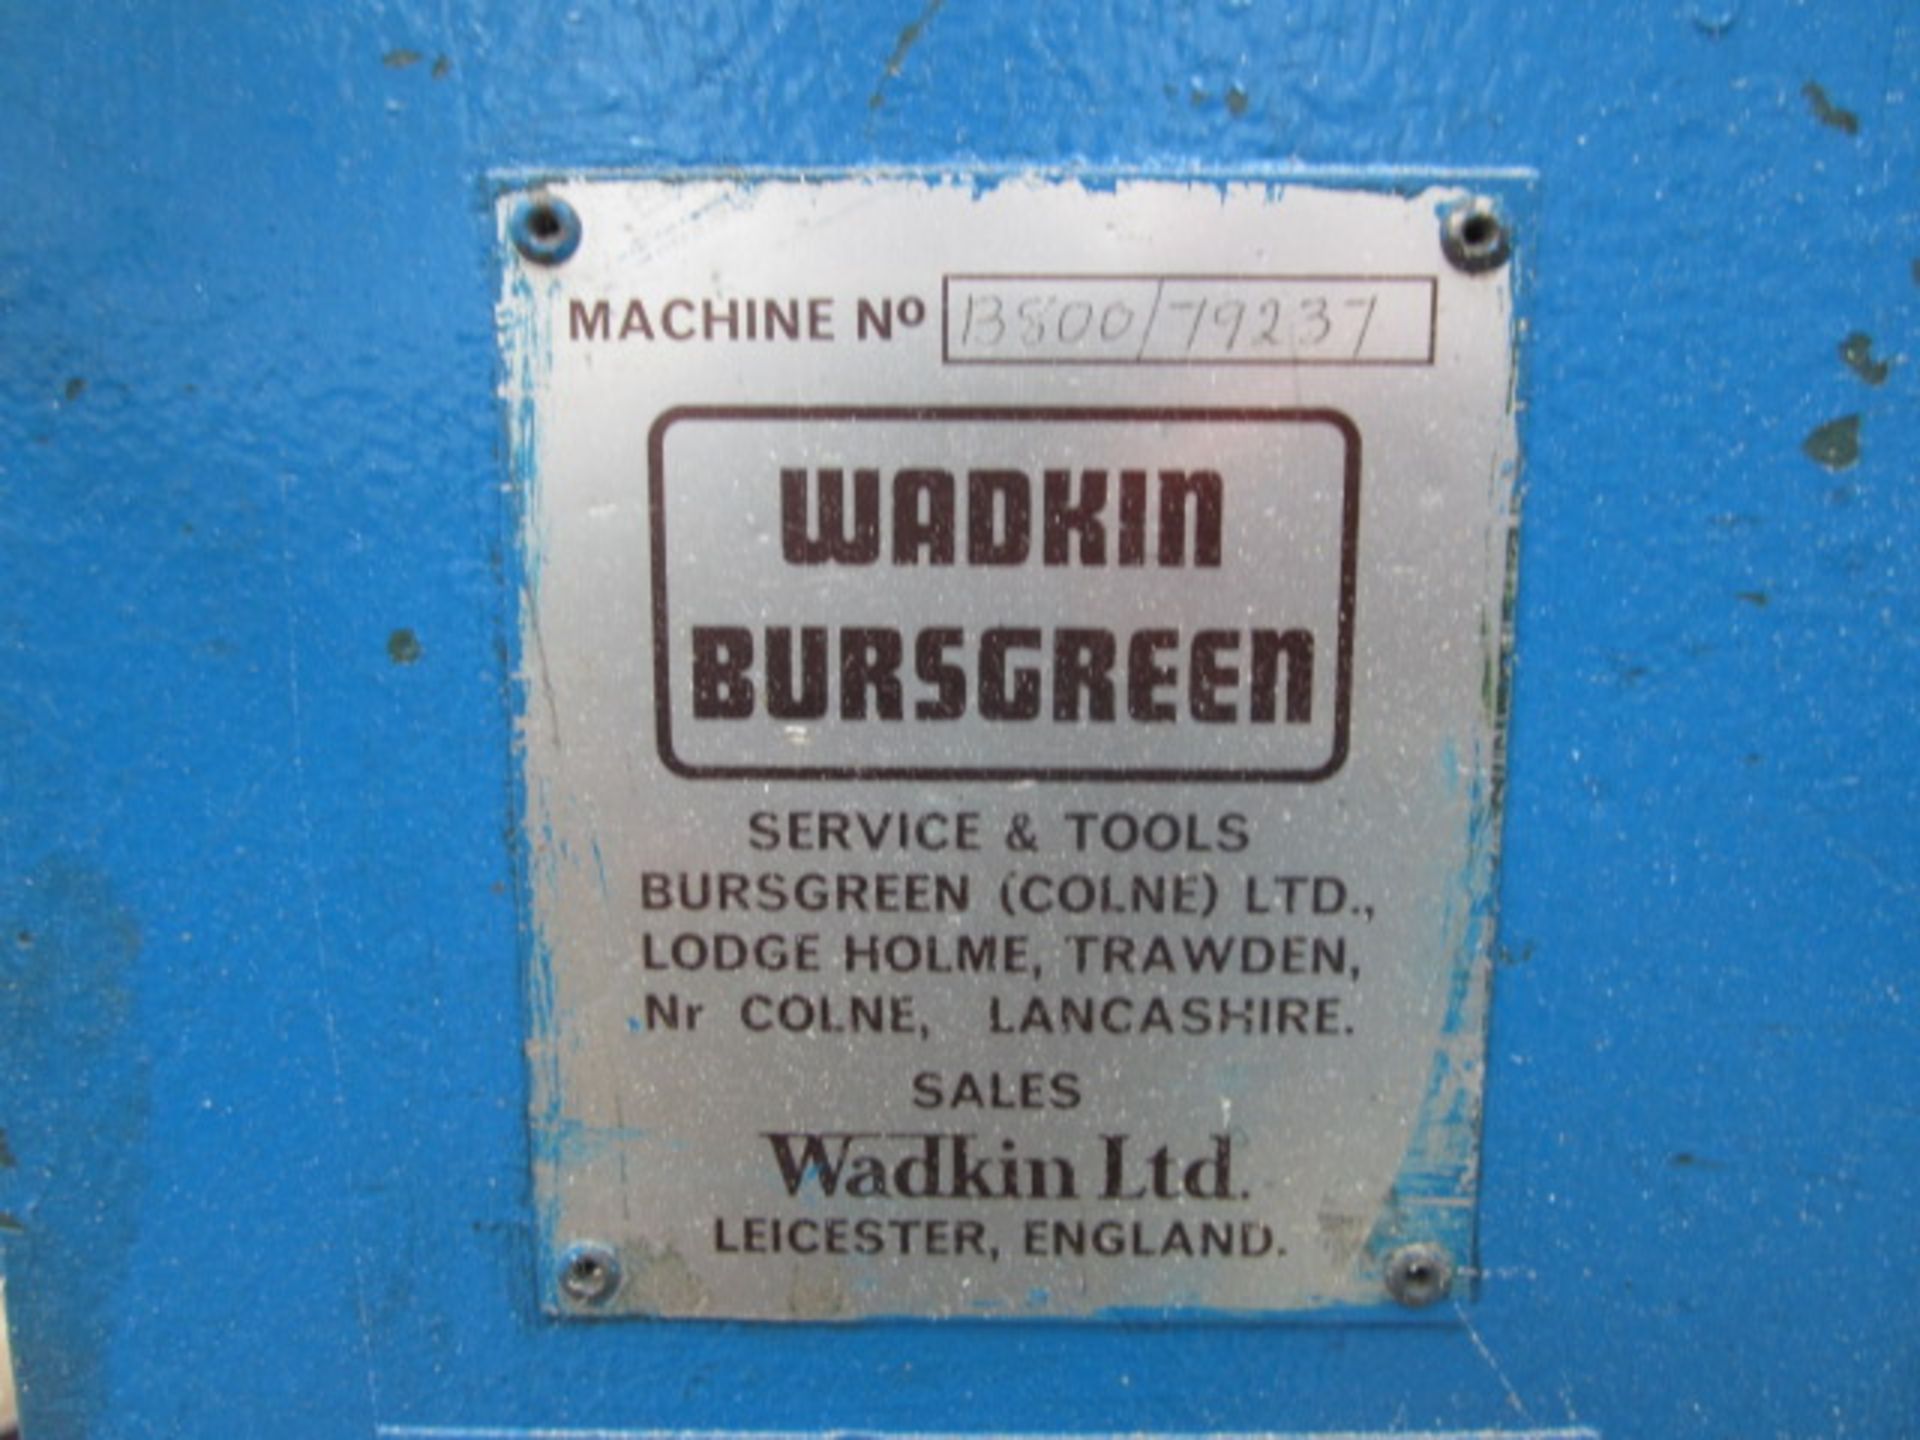 Wadkin Bursgreen B800 vertical bandsaw, Machine no: B800 / 79237. - Image 2 of 4